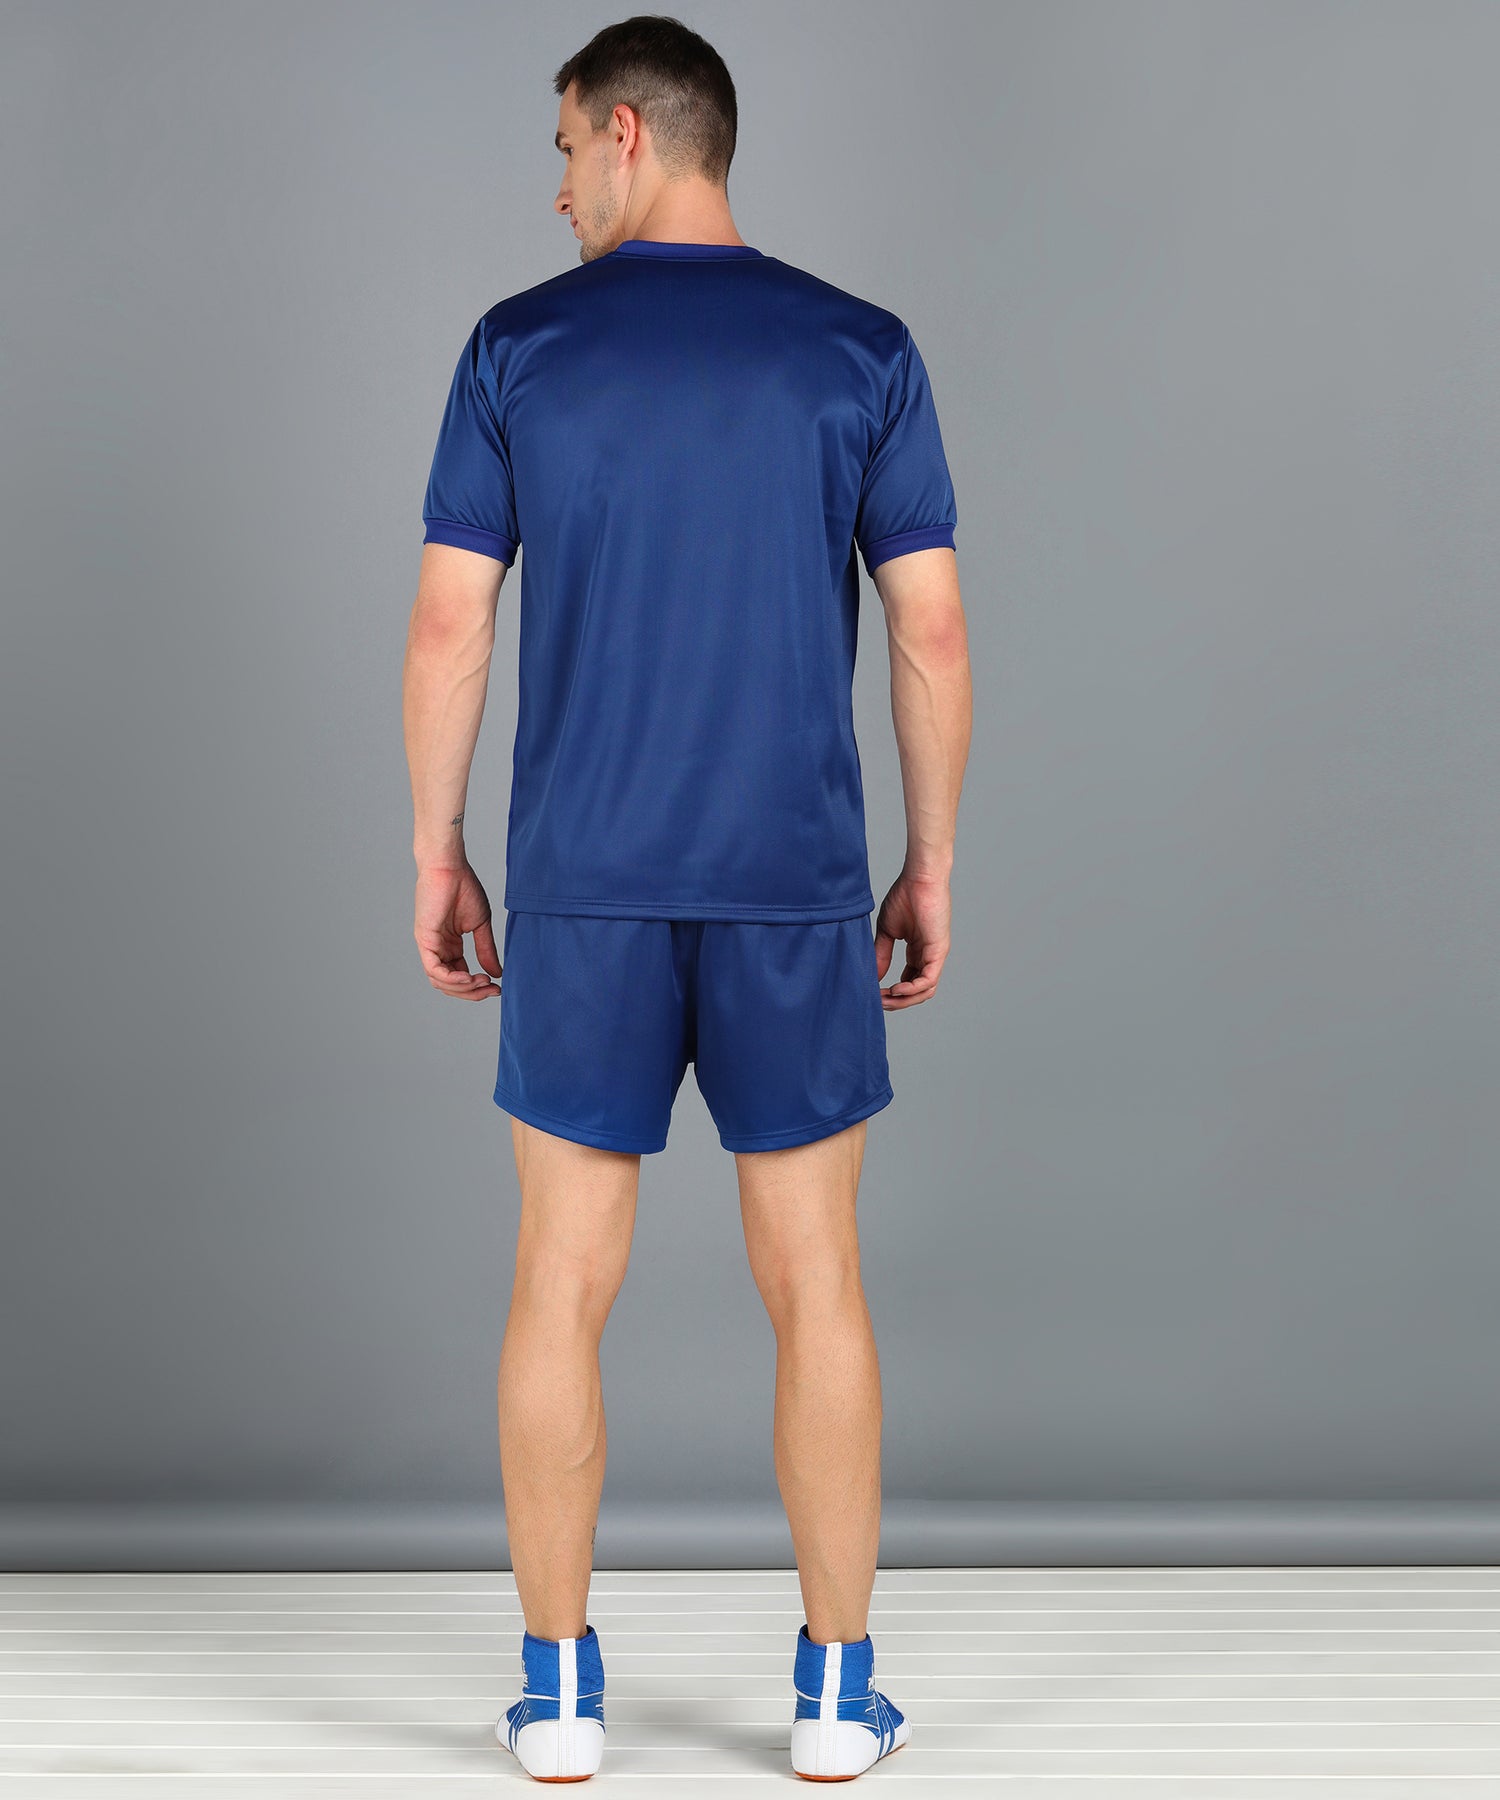 Pace International Kabaddi Jersey & Shorts for Men M / Navy Blue